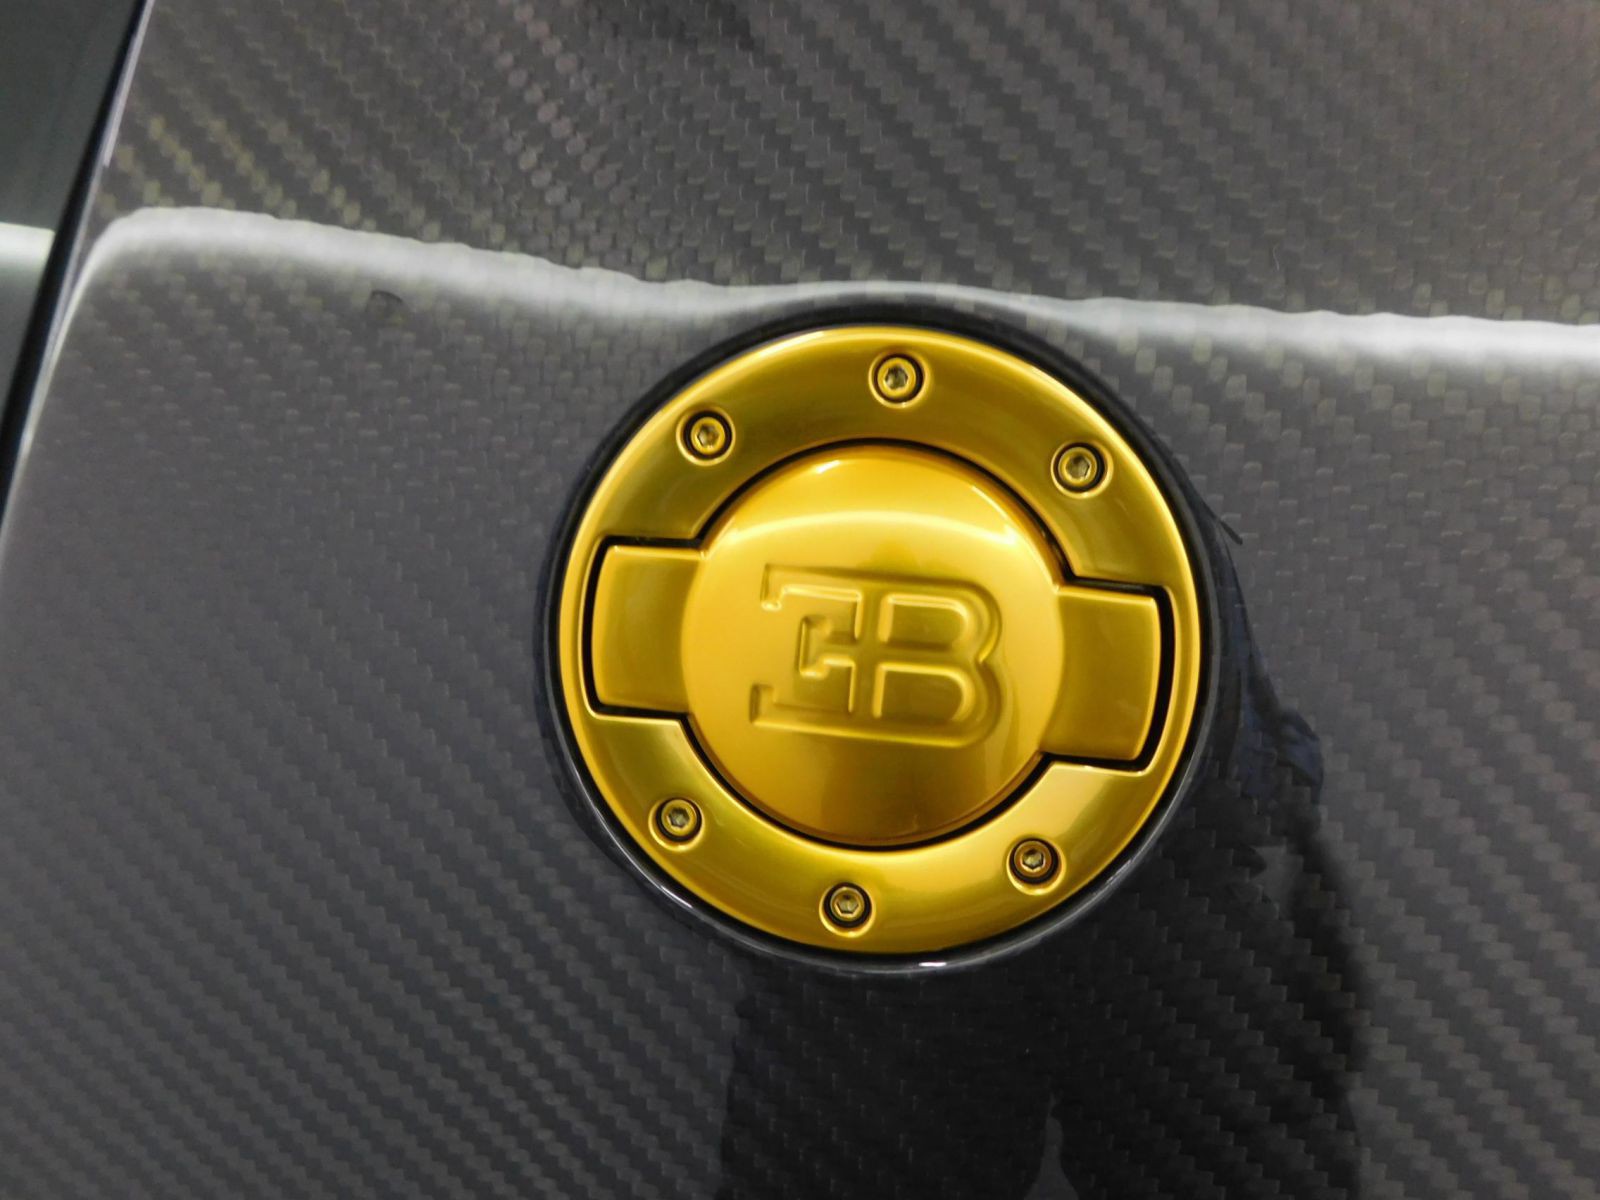 Bugatti Veyron by Mansory Linea Vincero d’Oro